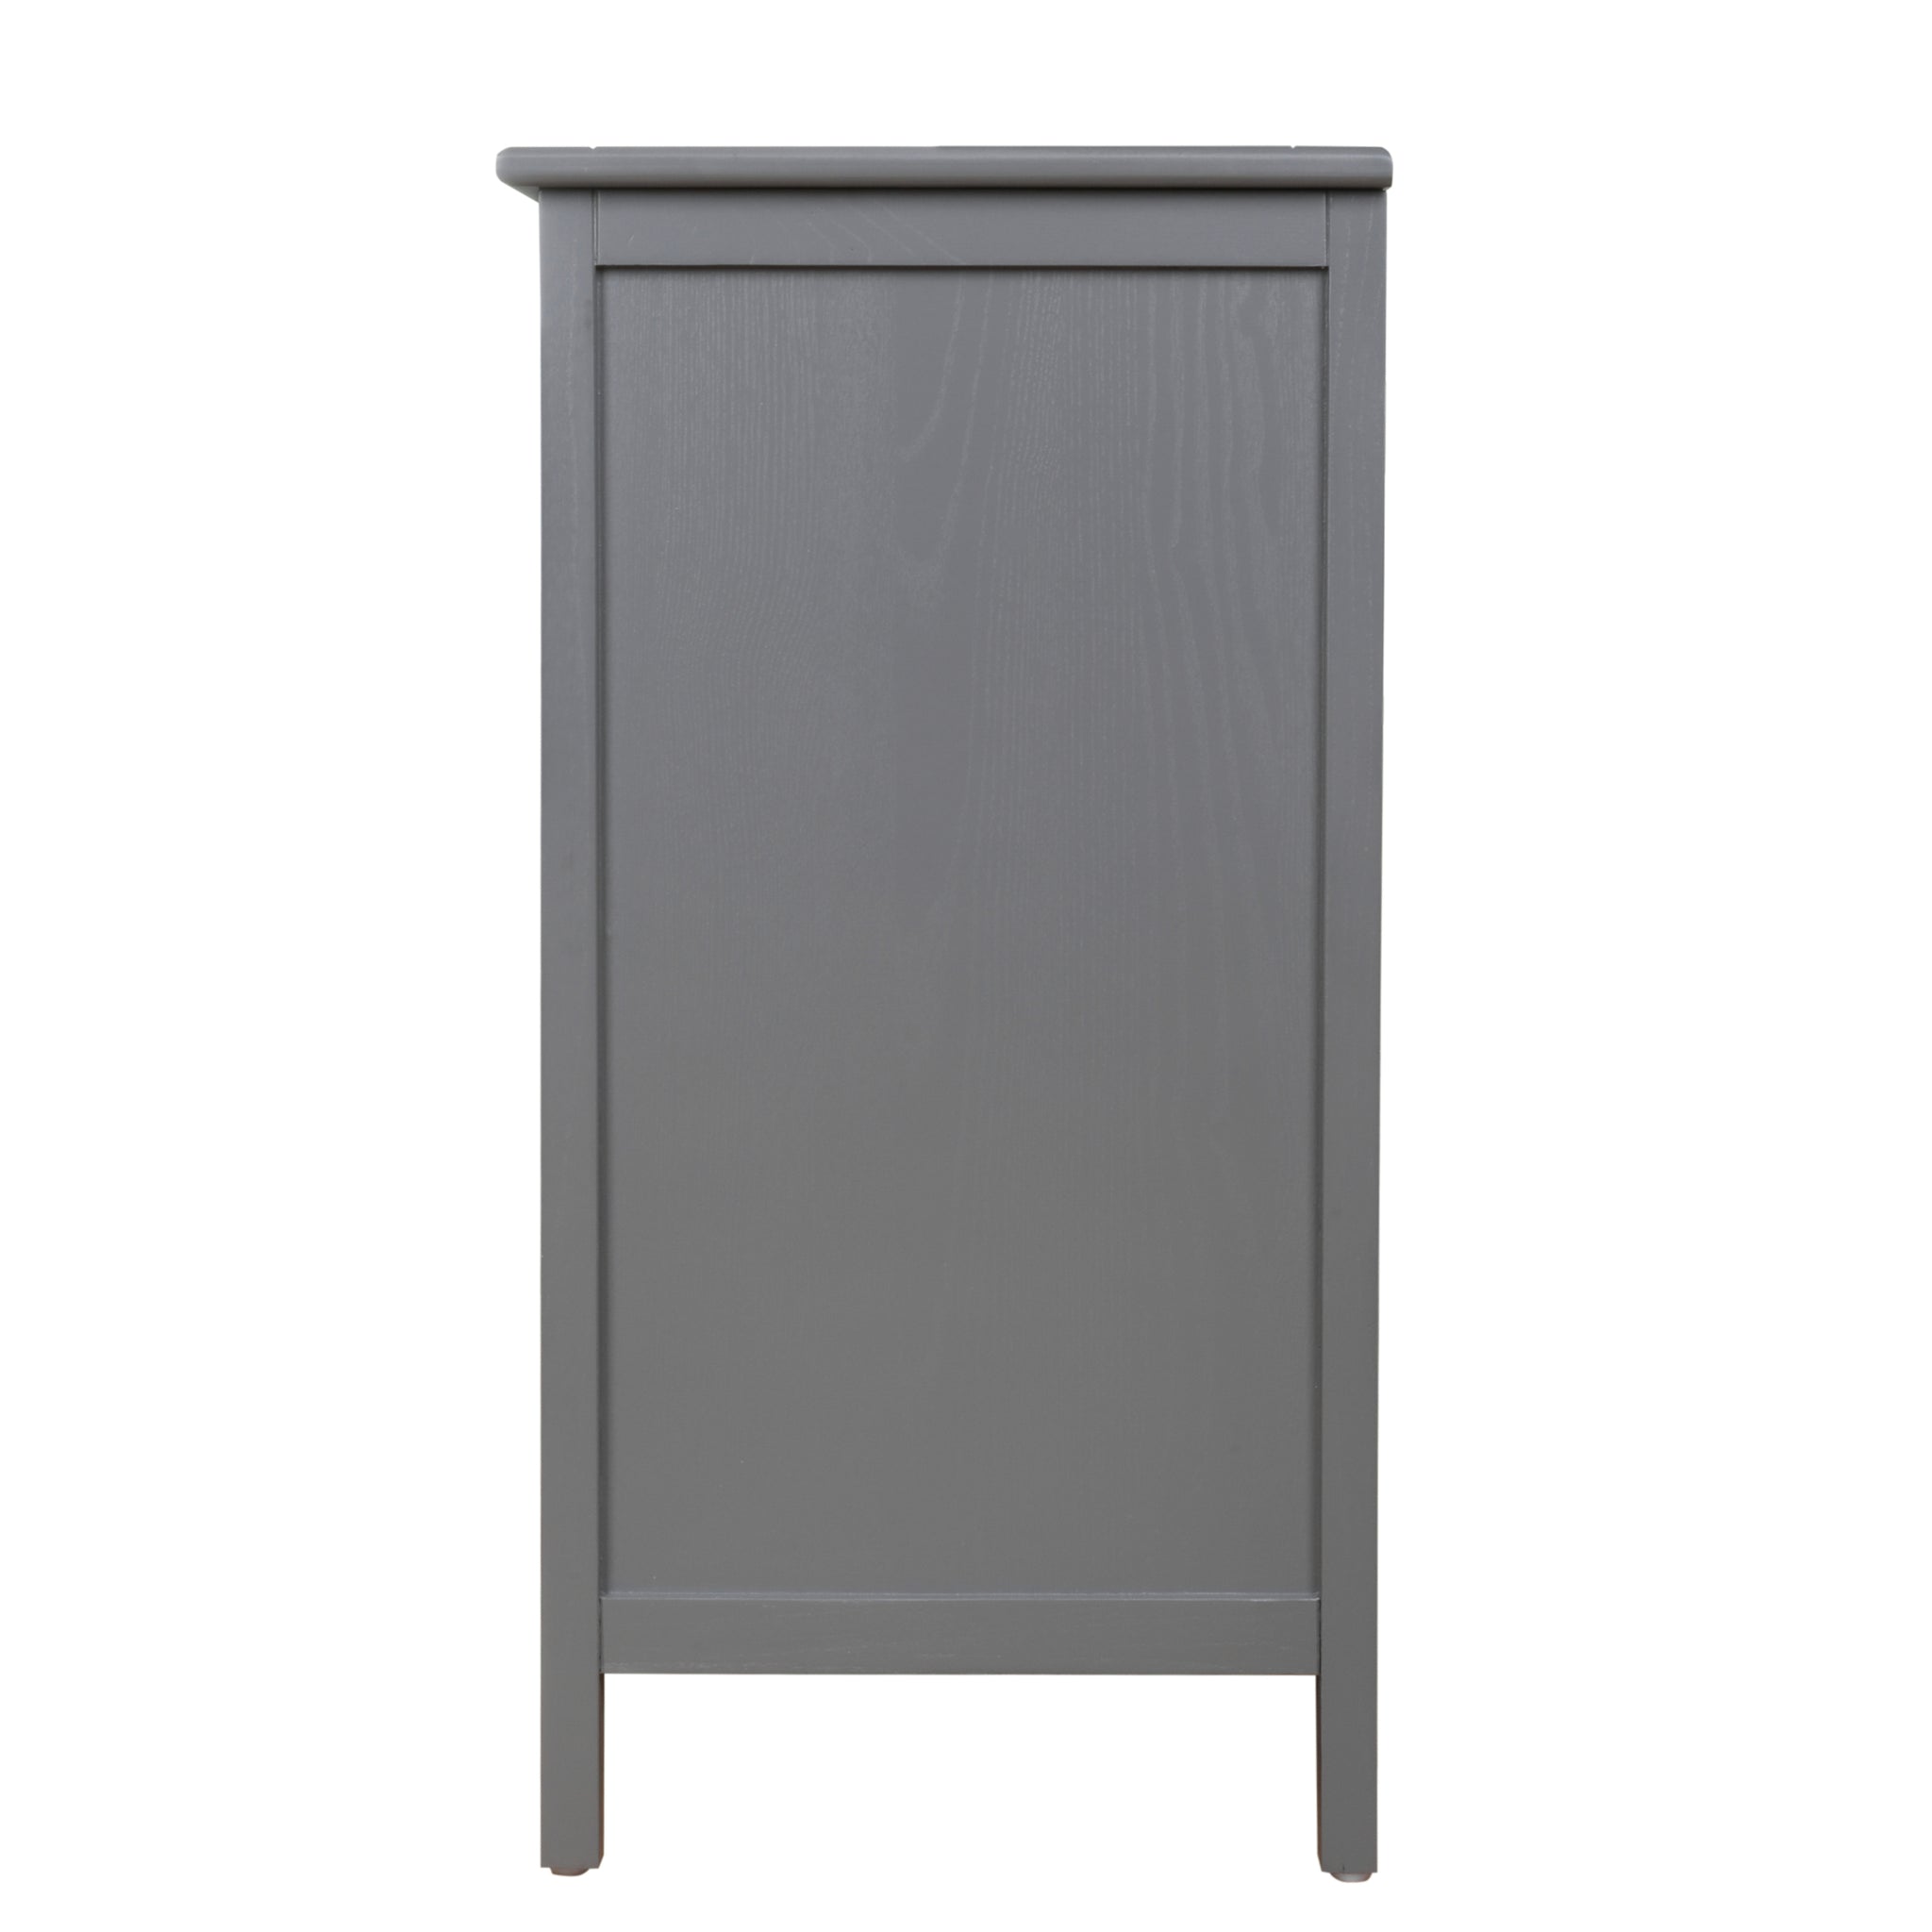 2 door cabinet with semicircular elements,natural grey-mdf